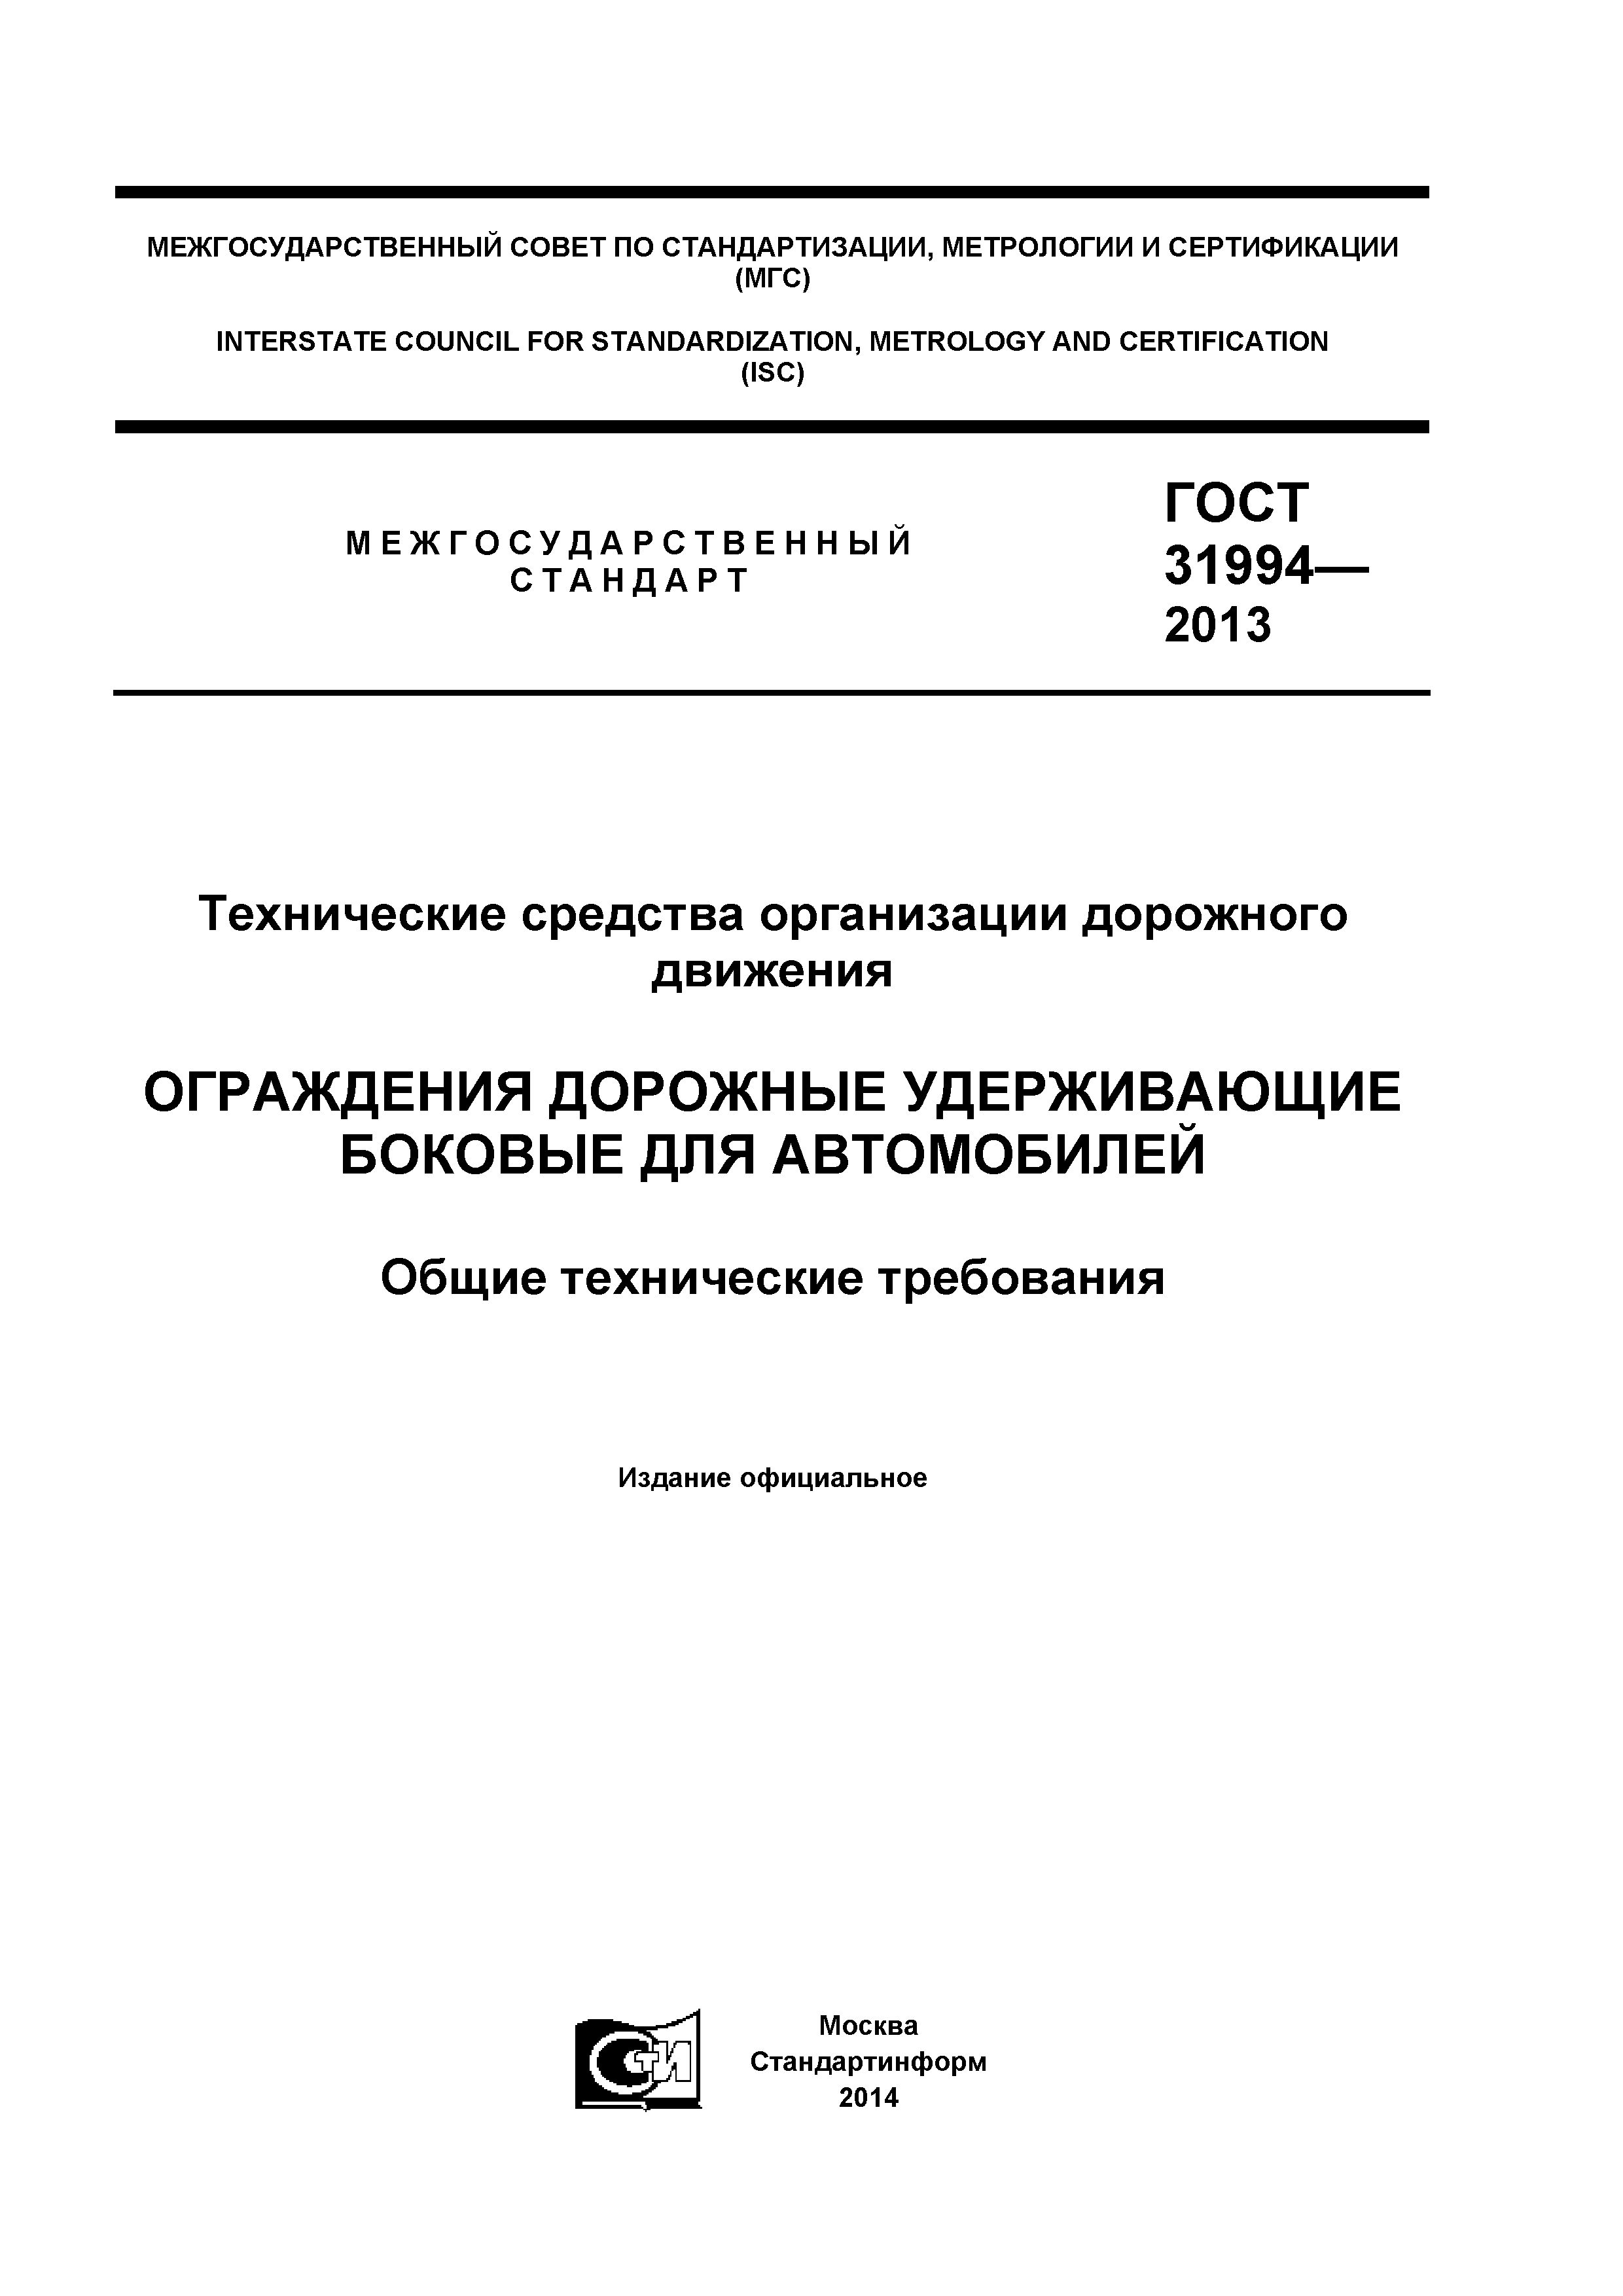 ГОСТ 31994-2013